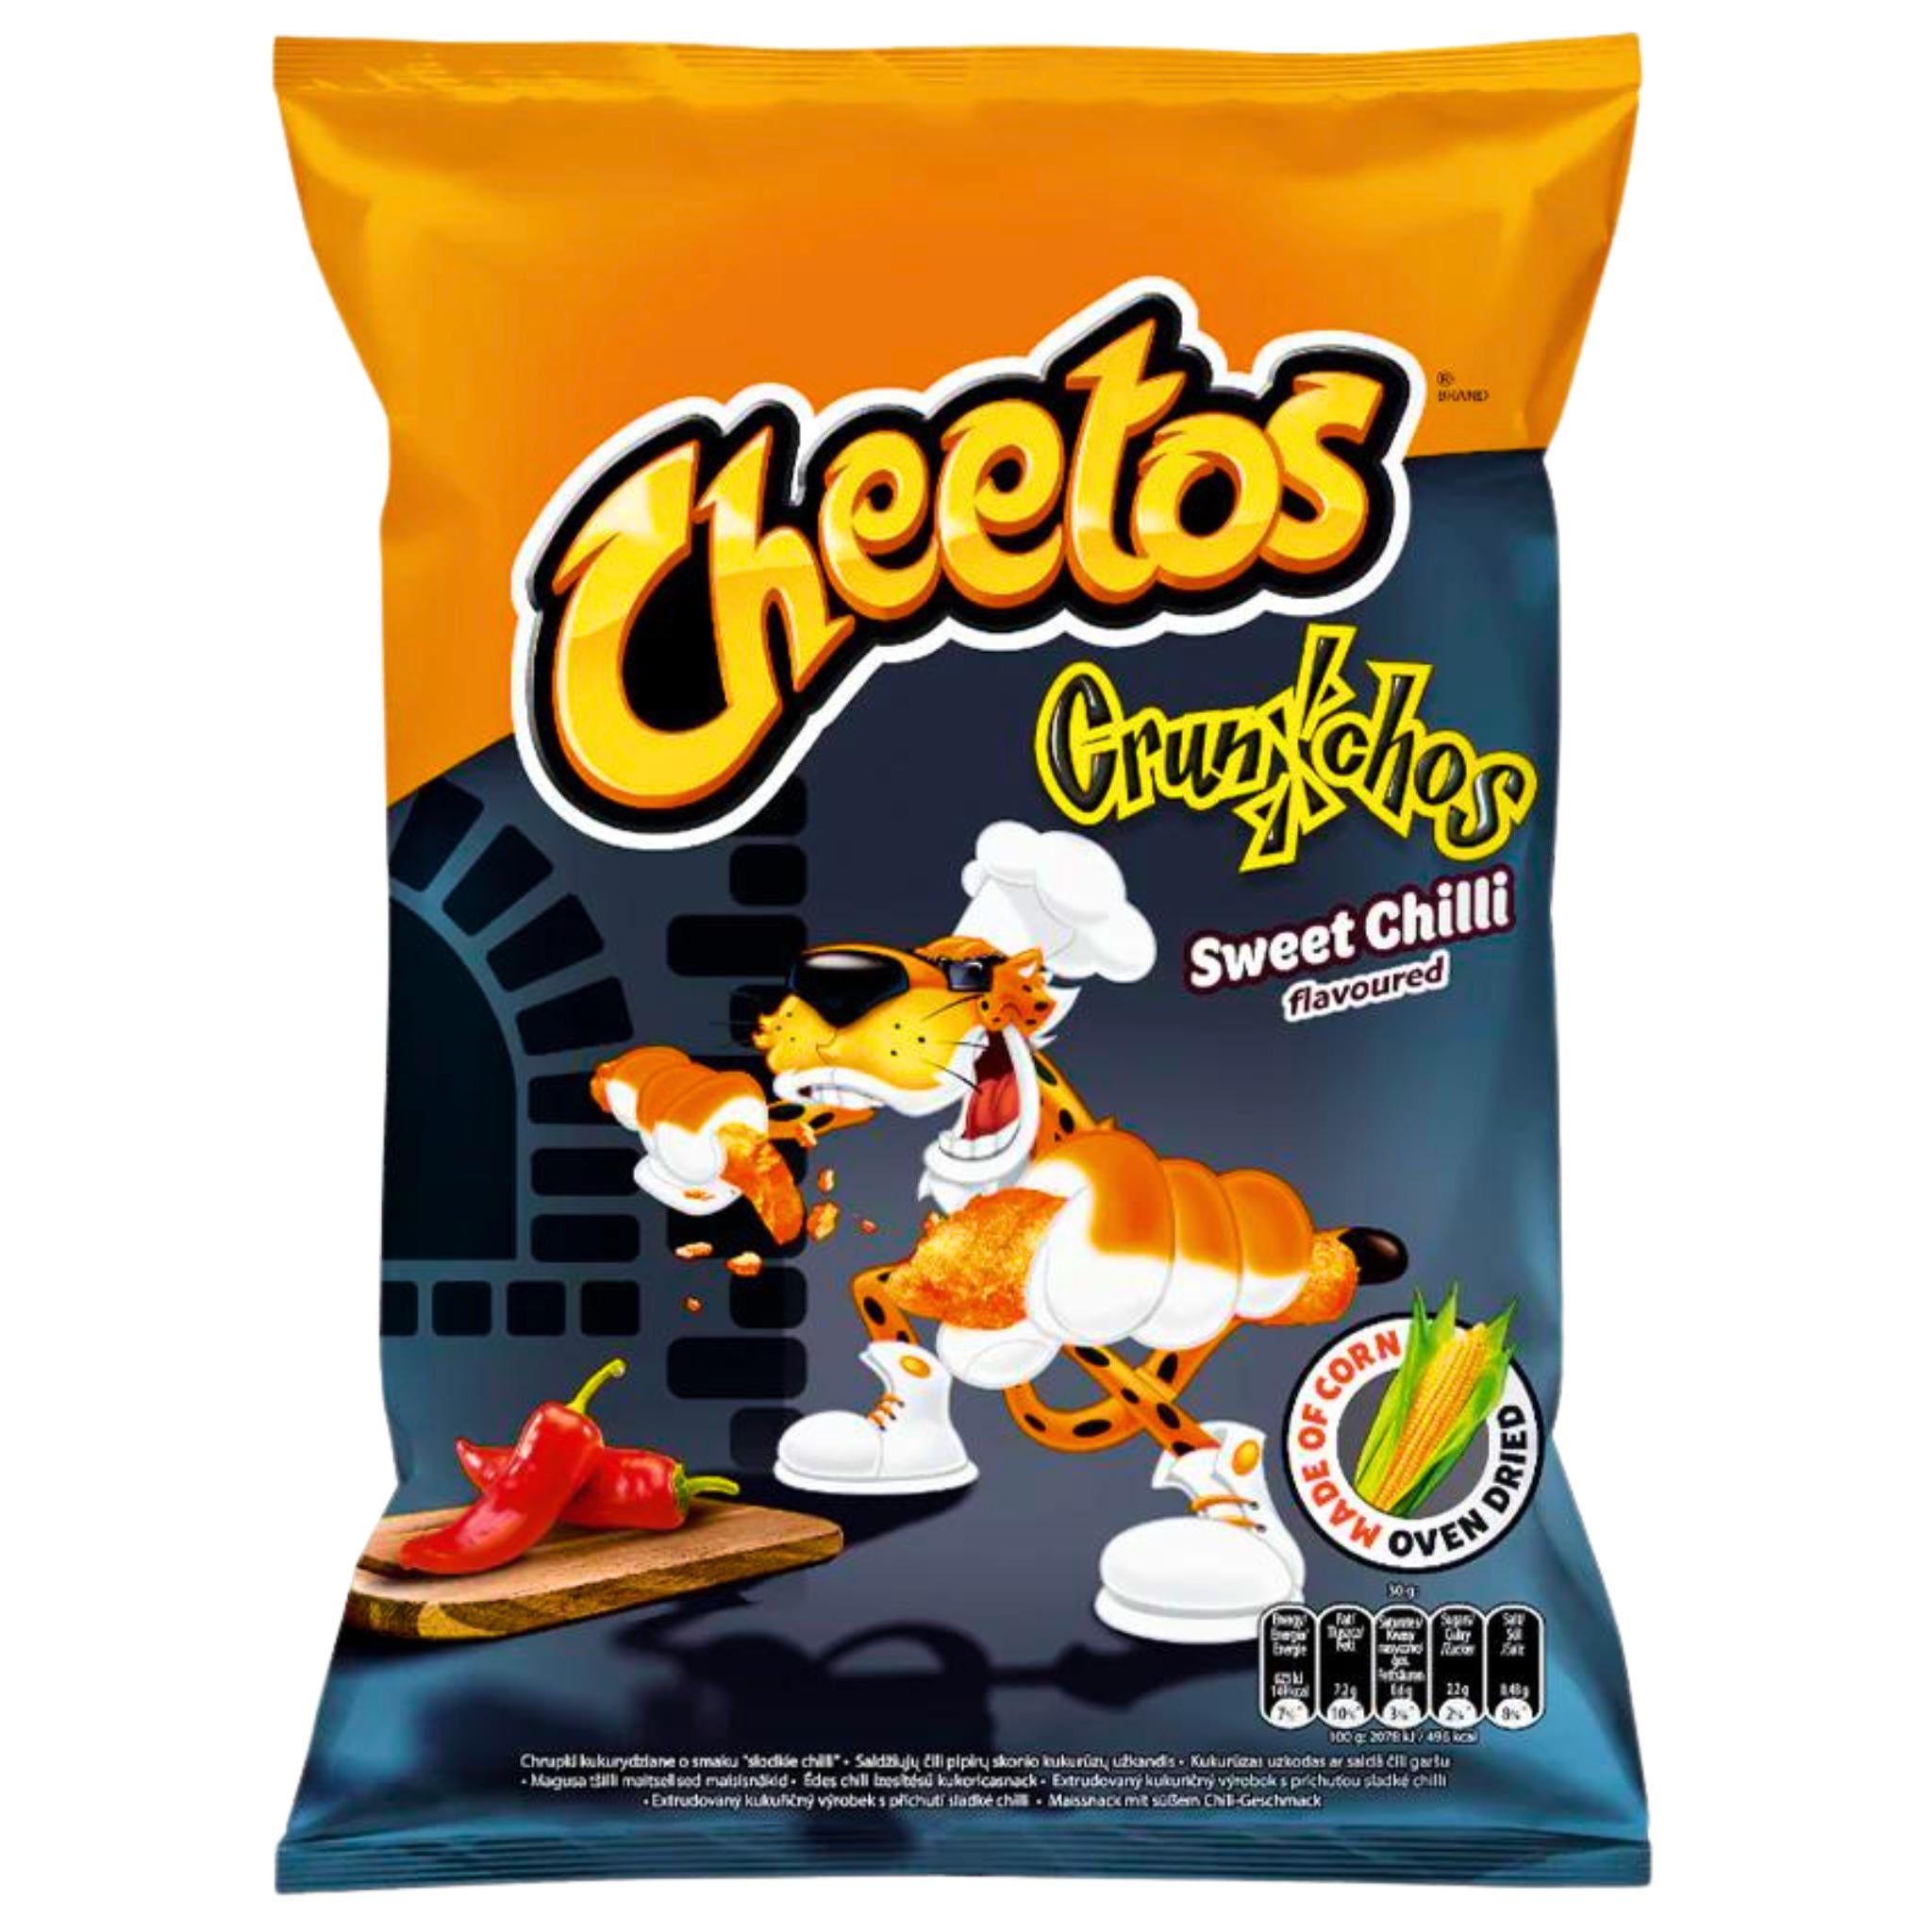 Cheetos Crunchos Sweet Chili - 95g (POOLS)